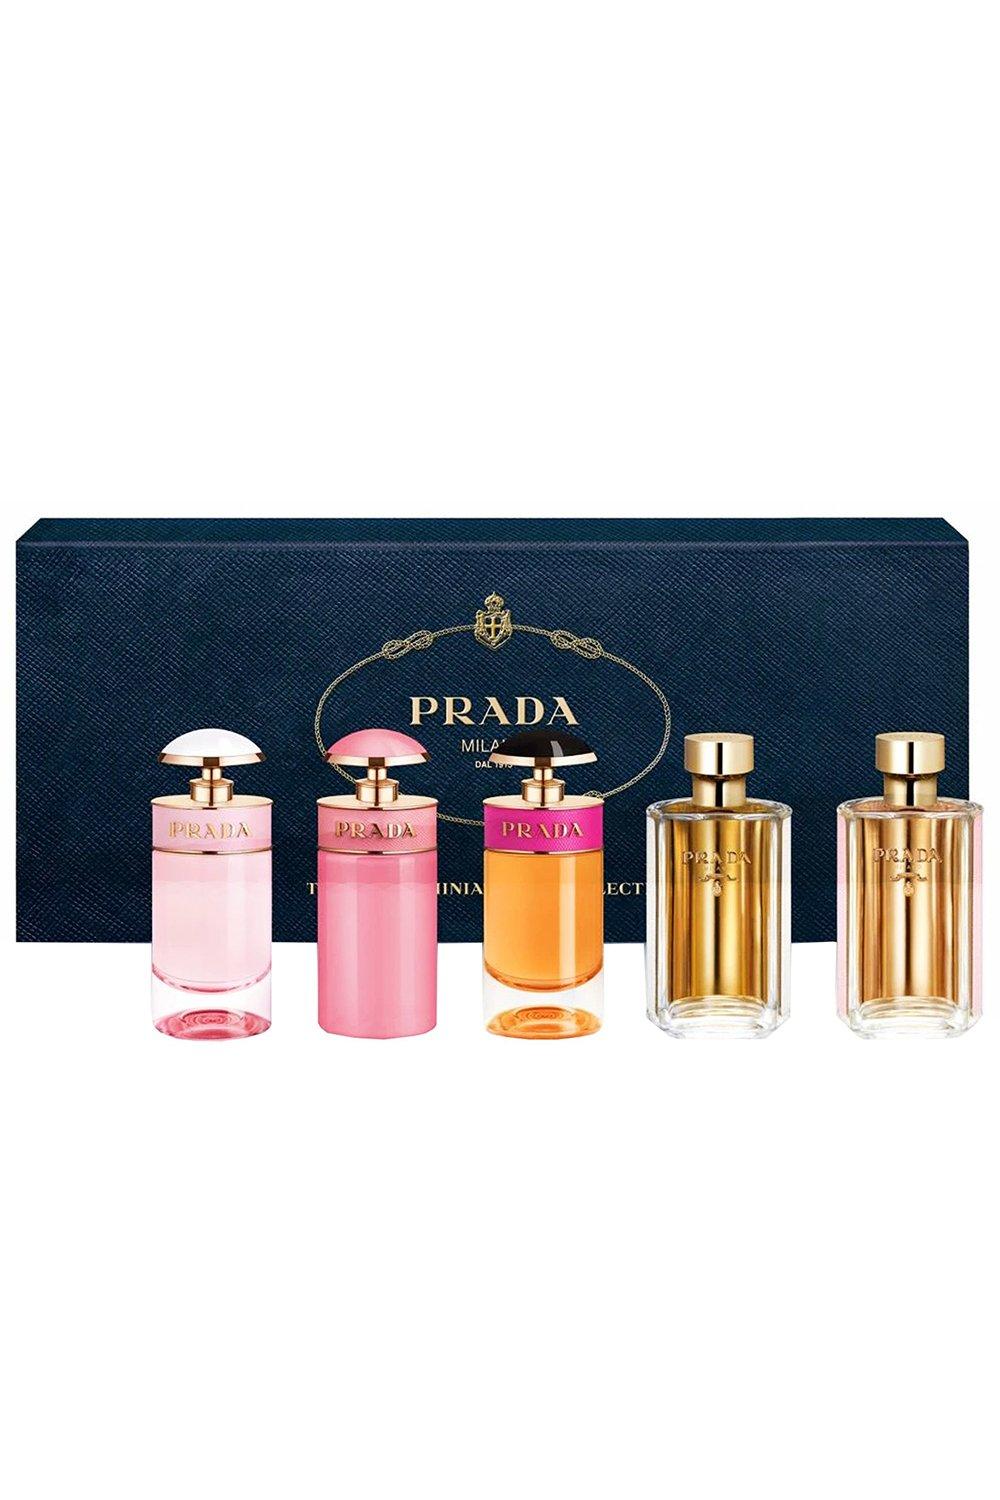 Prada Miniature Fragrance Gift Set | Studio